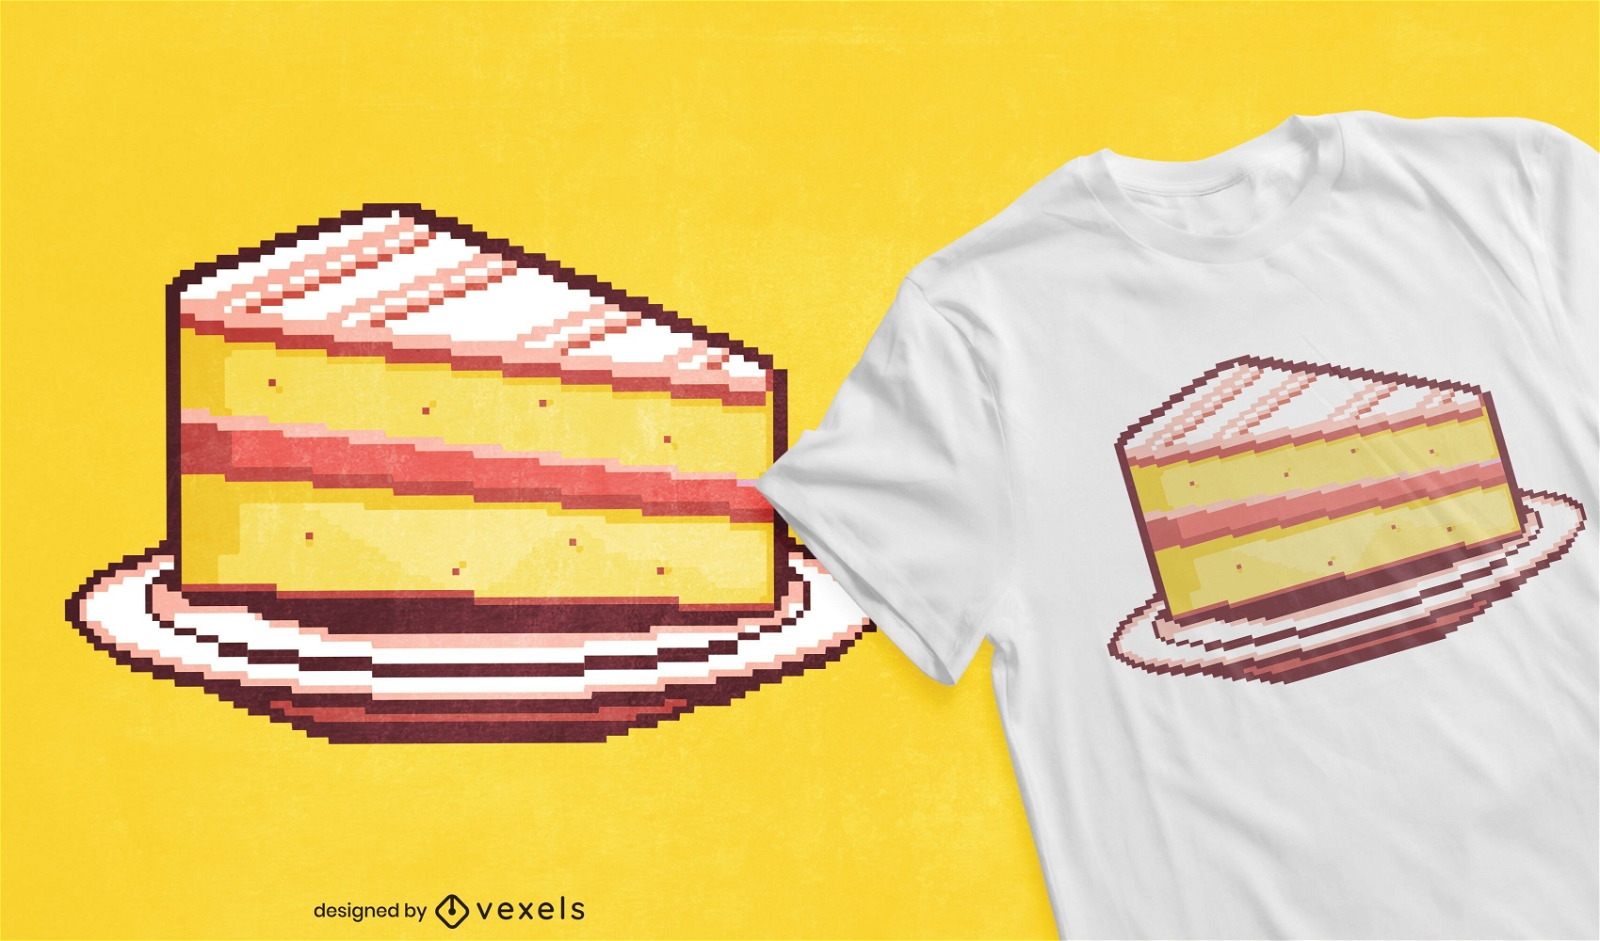 Hawaiian Shirt Cake - YouTube